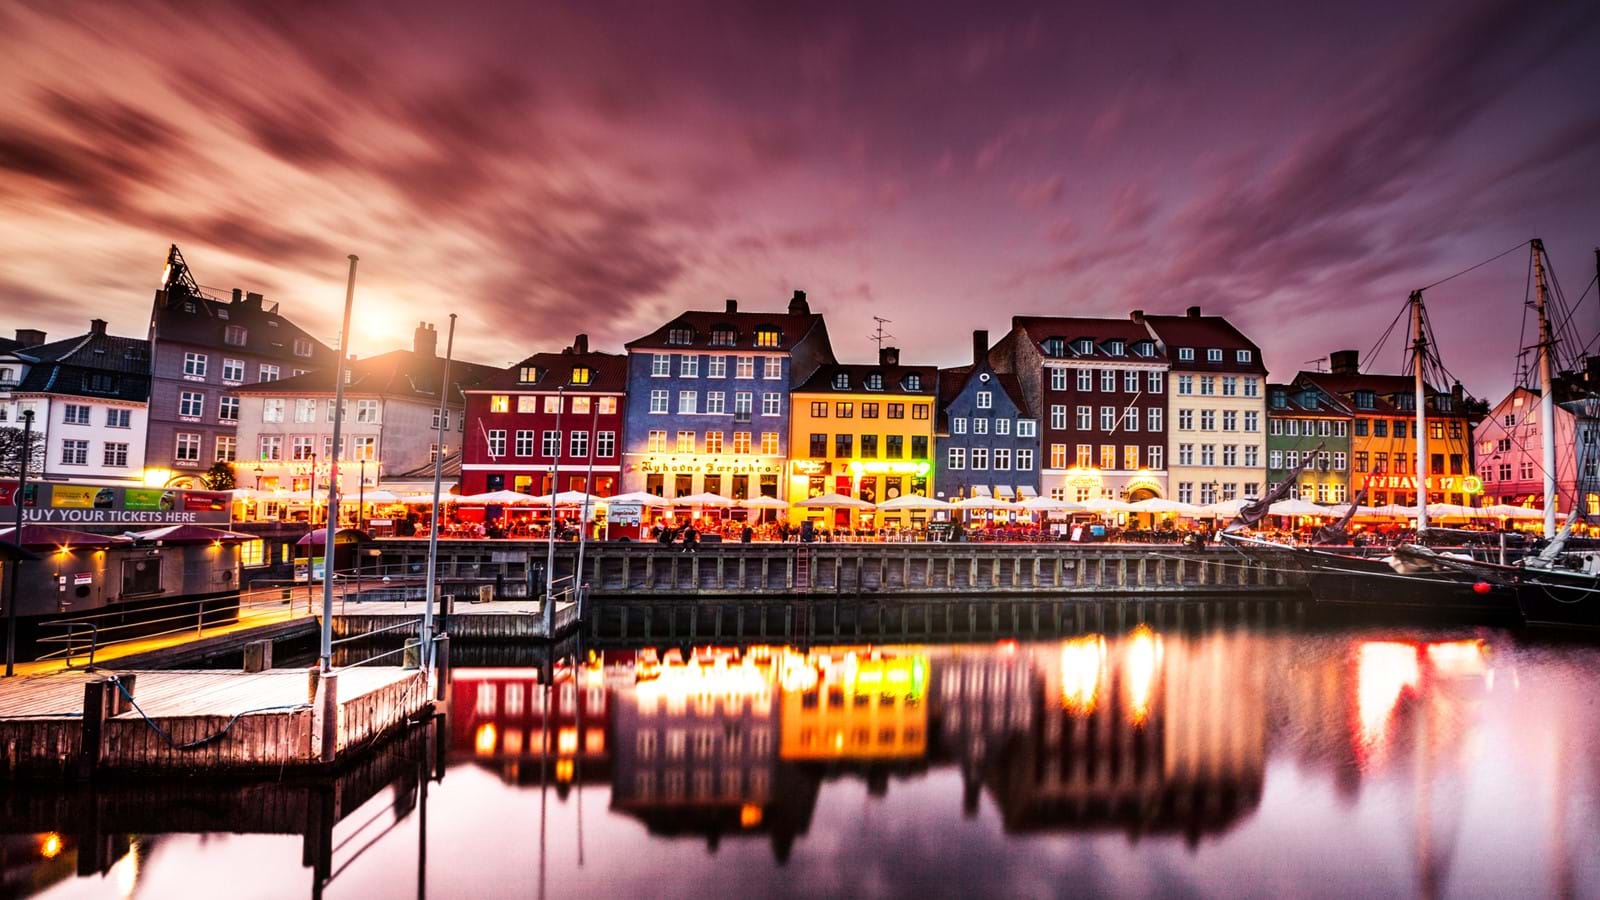 Copenhagen's famous canal boats 